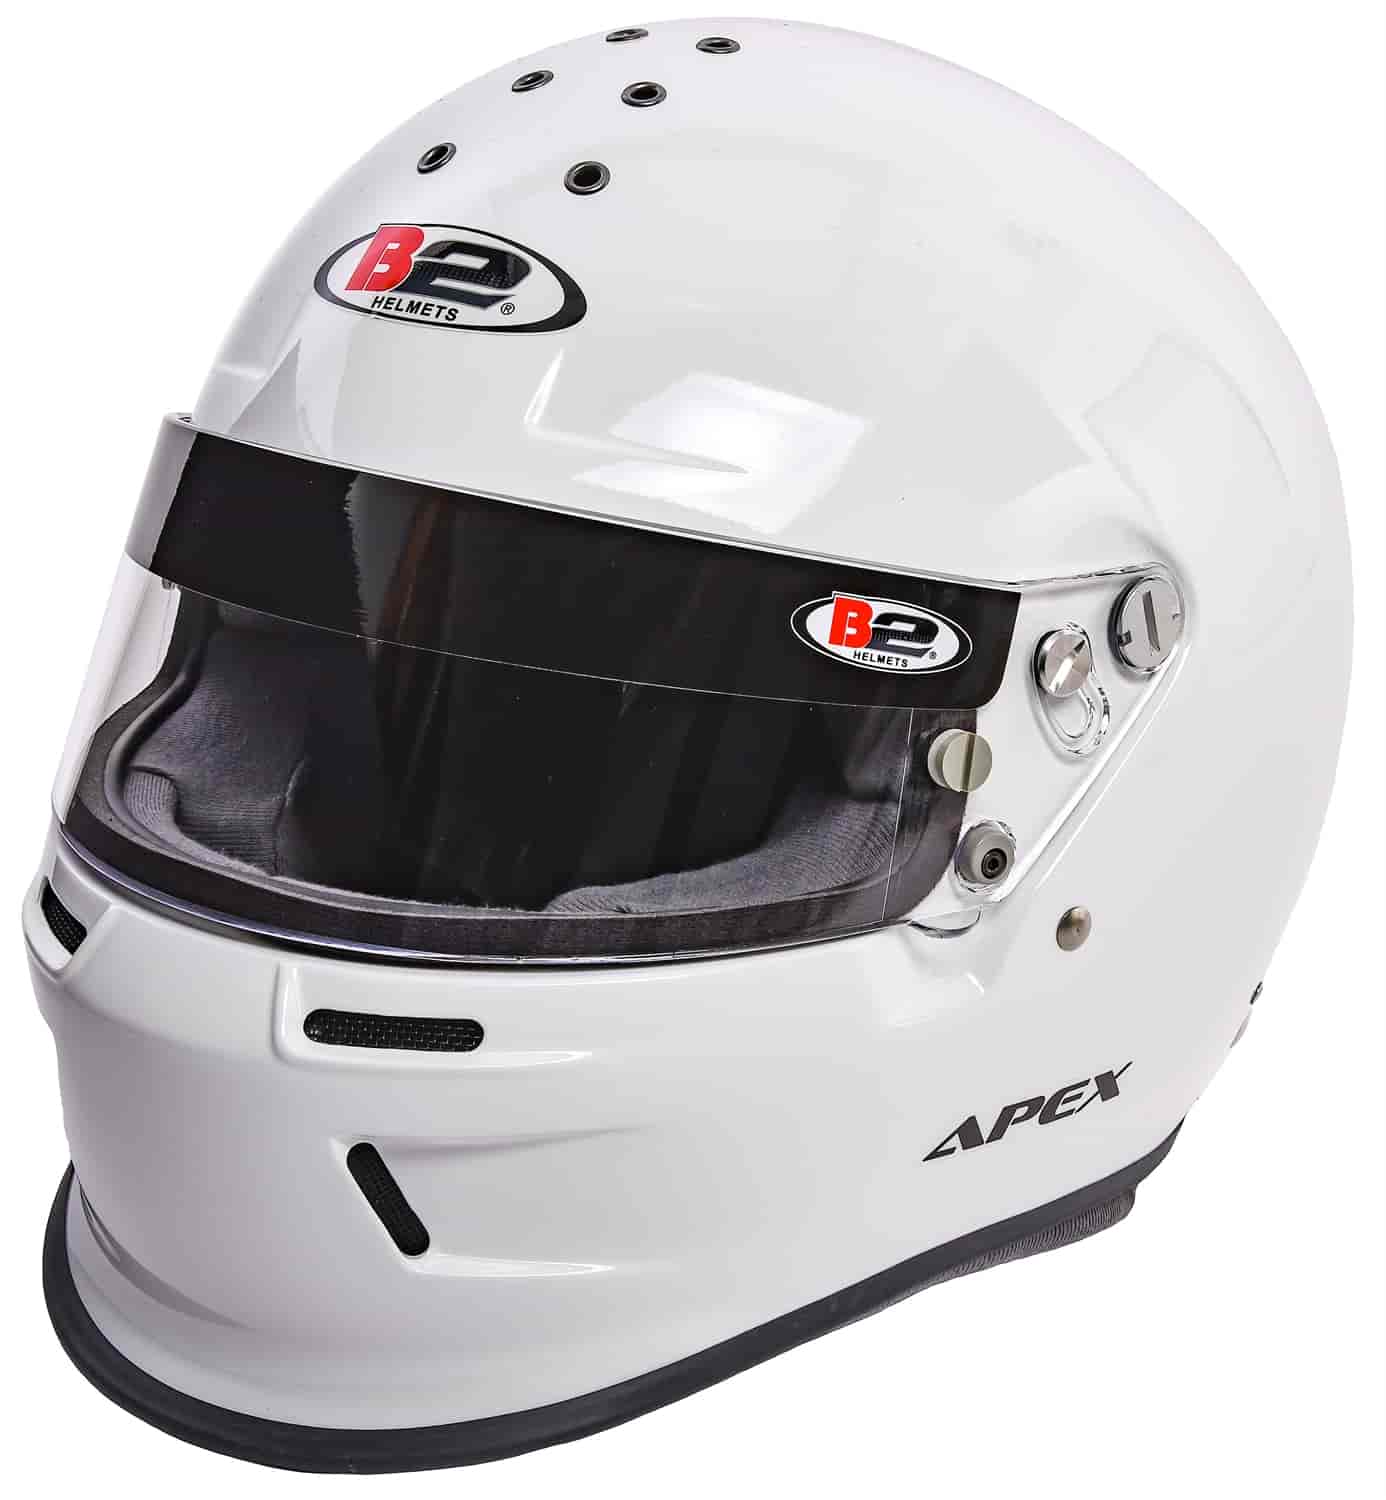 Apex Helmet White - Large